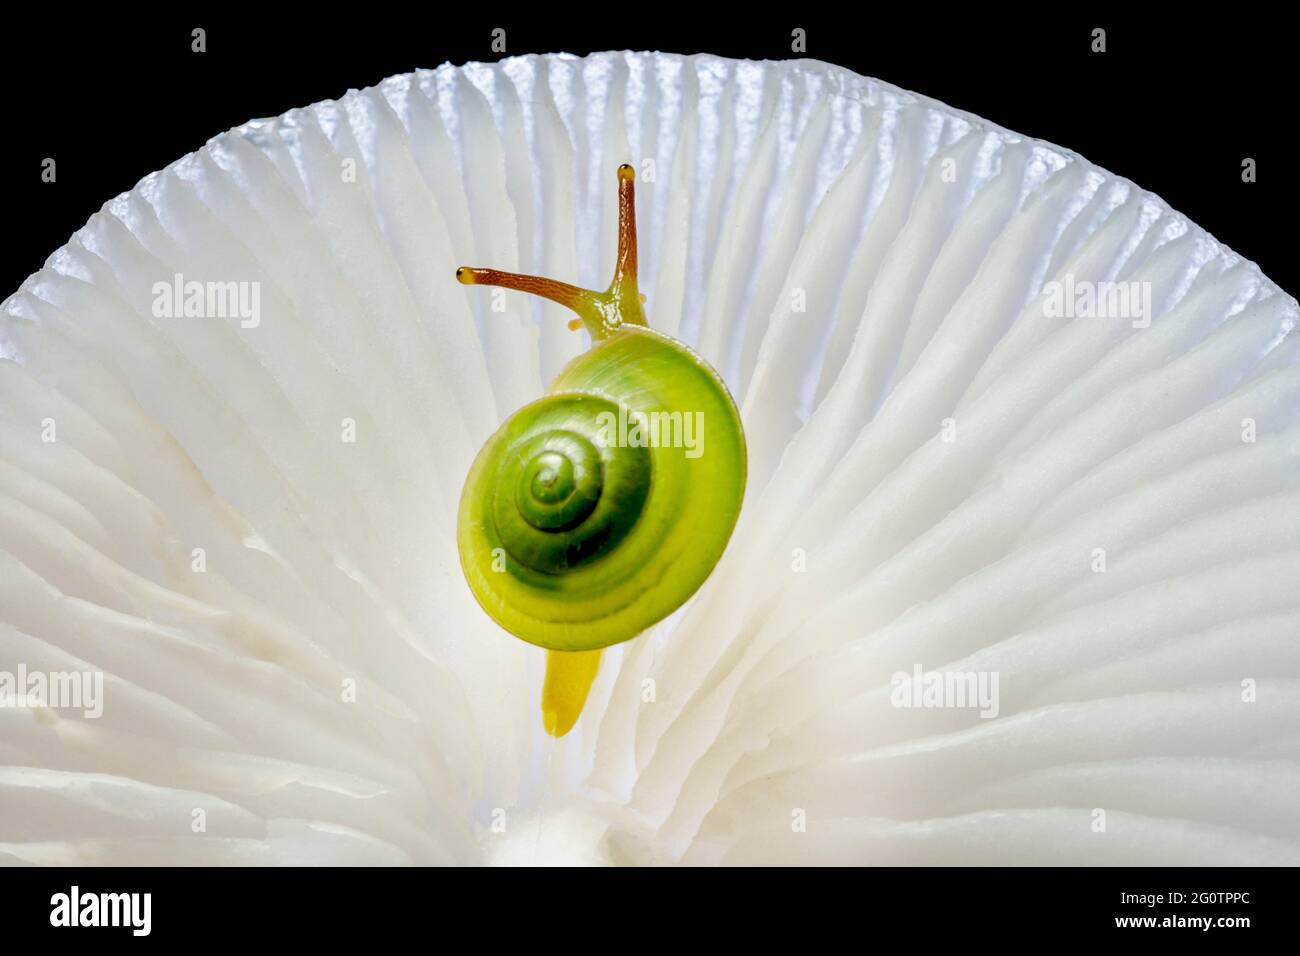 Green Snail (Rhinocochlis nasuta) as the name implies has a bright green shell is one type of snail from the mollusk group. This type of snail is foun Stock Photo